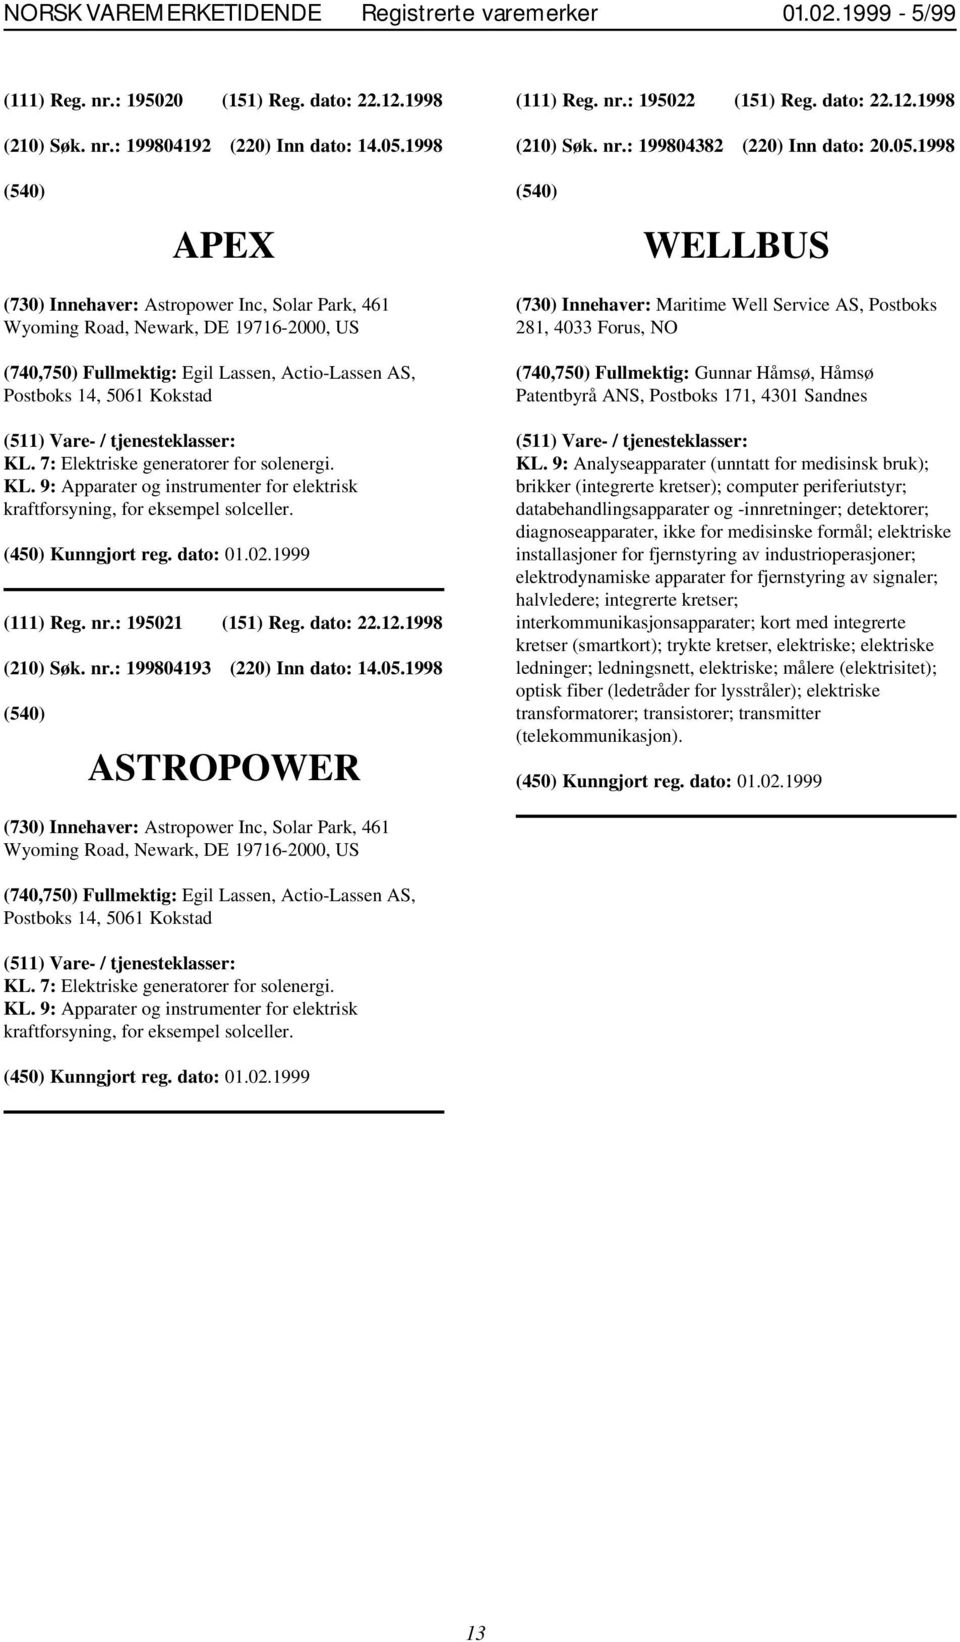 1998 APEX WELLBUS (730) Innehaver: Astropower Inc, Solar Park, 461 Wyoming Road, Newark, DE 19716-2000, US (740,750) Fullmektig: Egil Lassen, Actio-Lassen AS, Postboks 14, 5061 Kokstad KL.